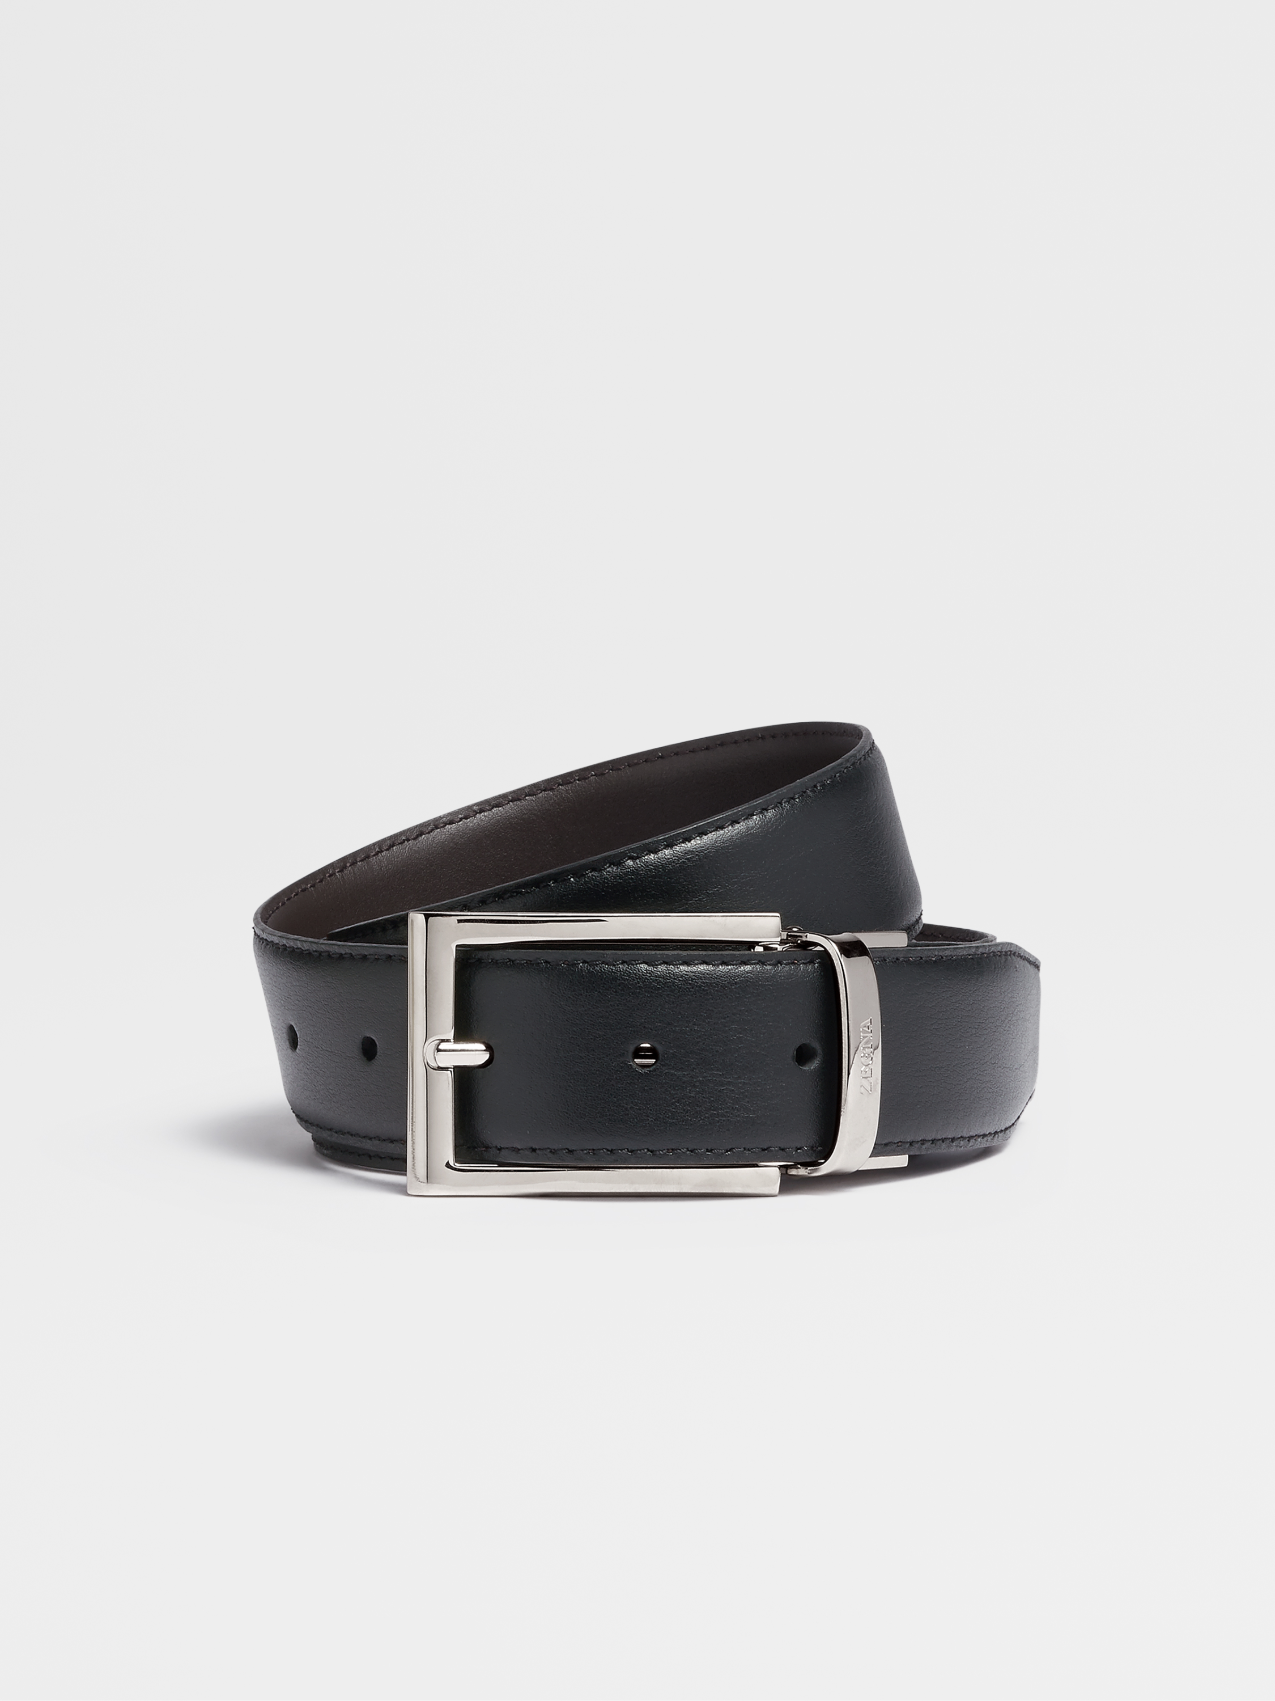 Black and Dark Brown Reversible Leather Belt